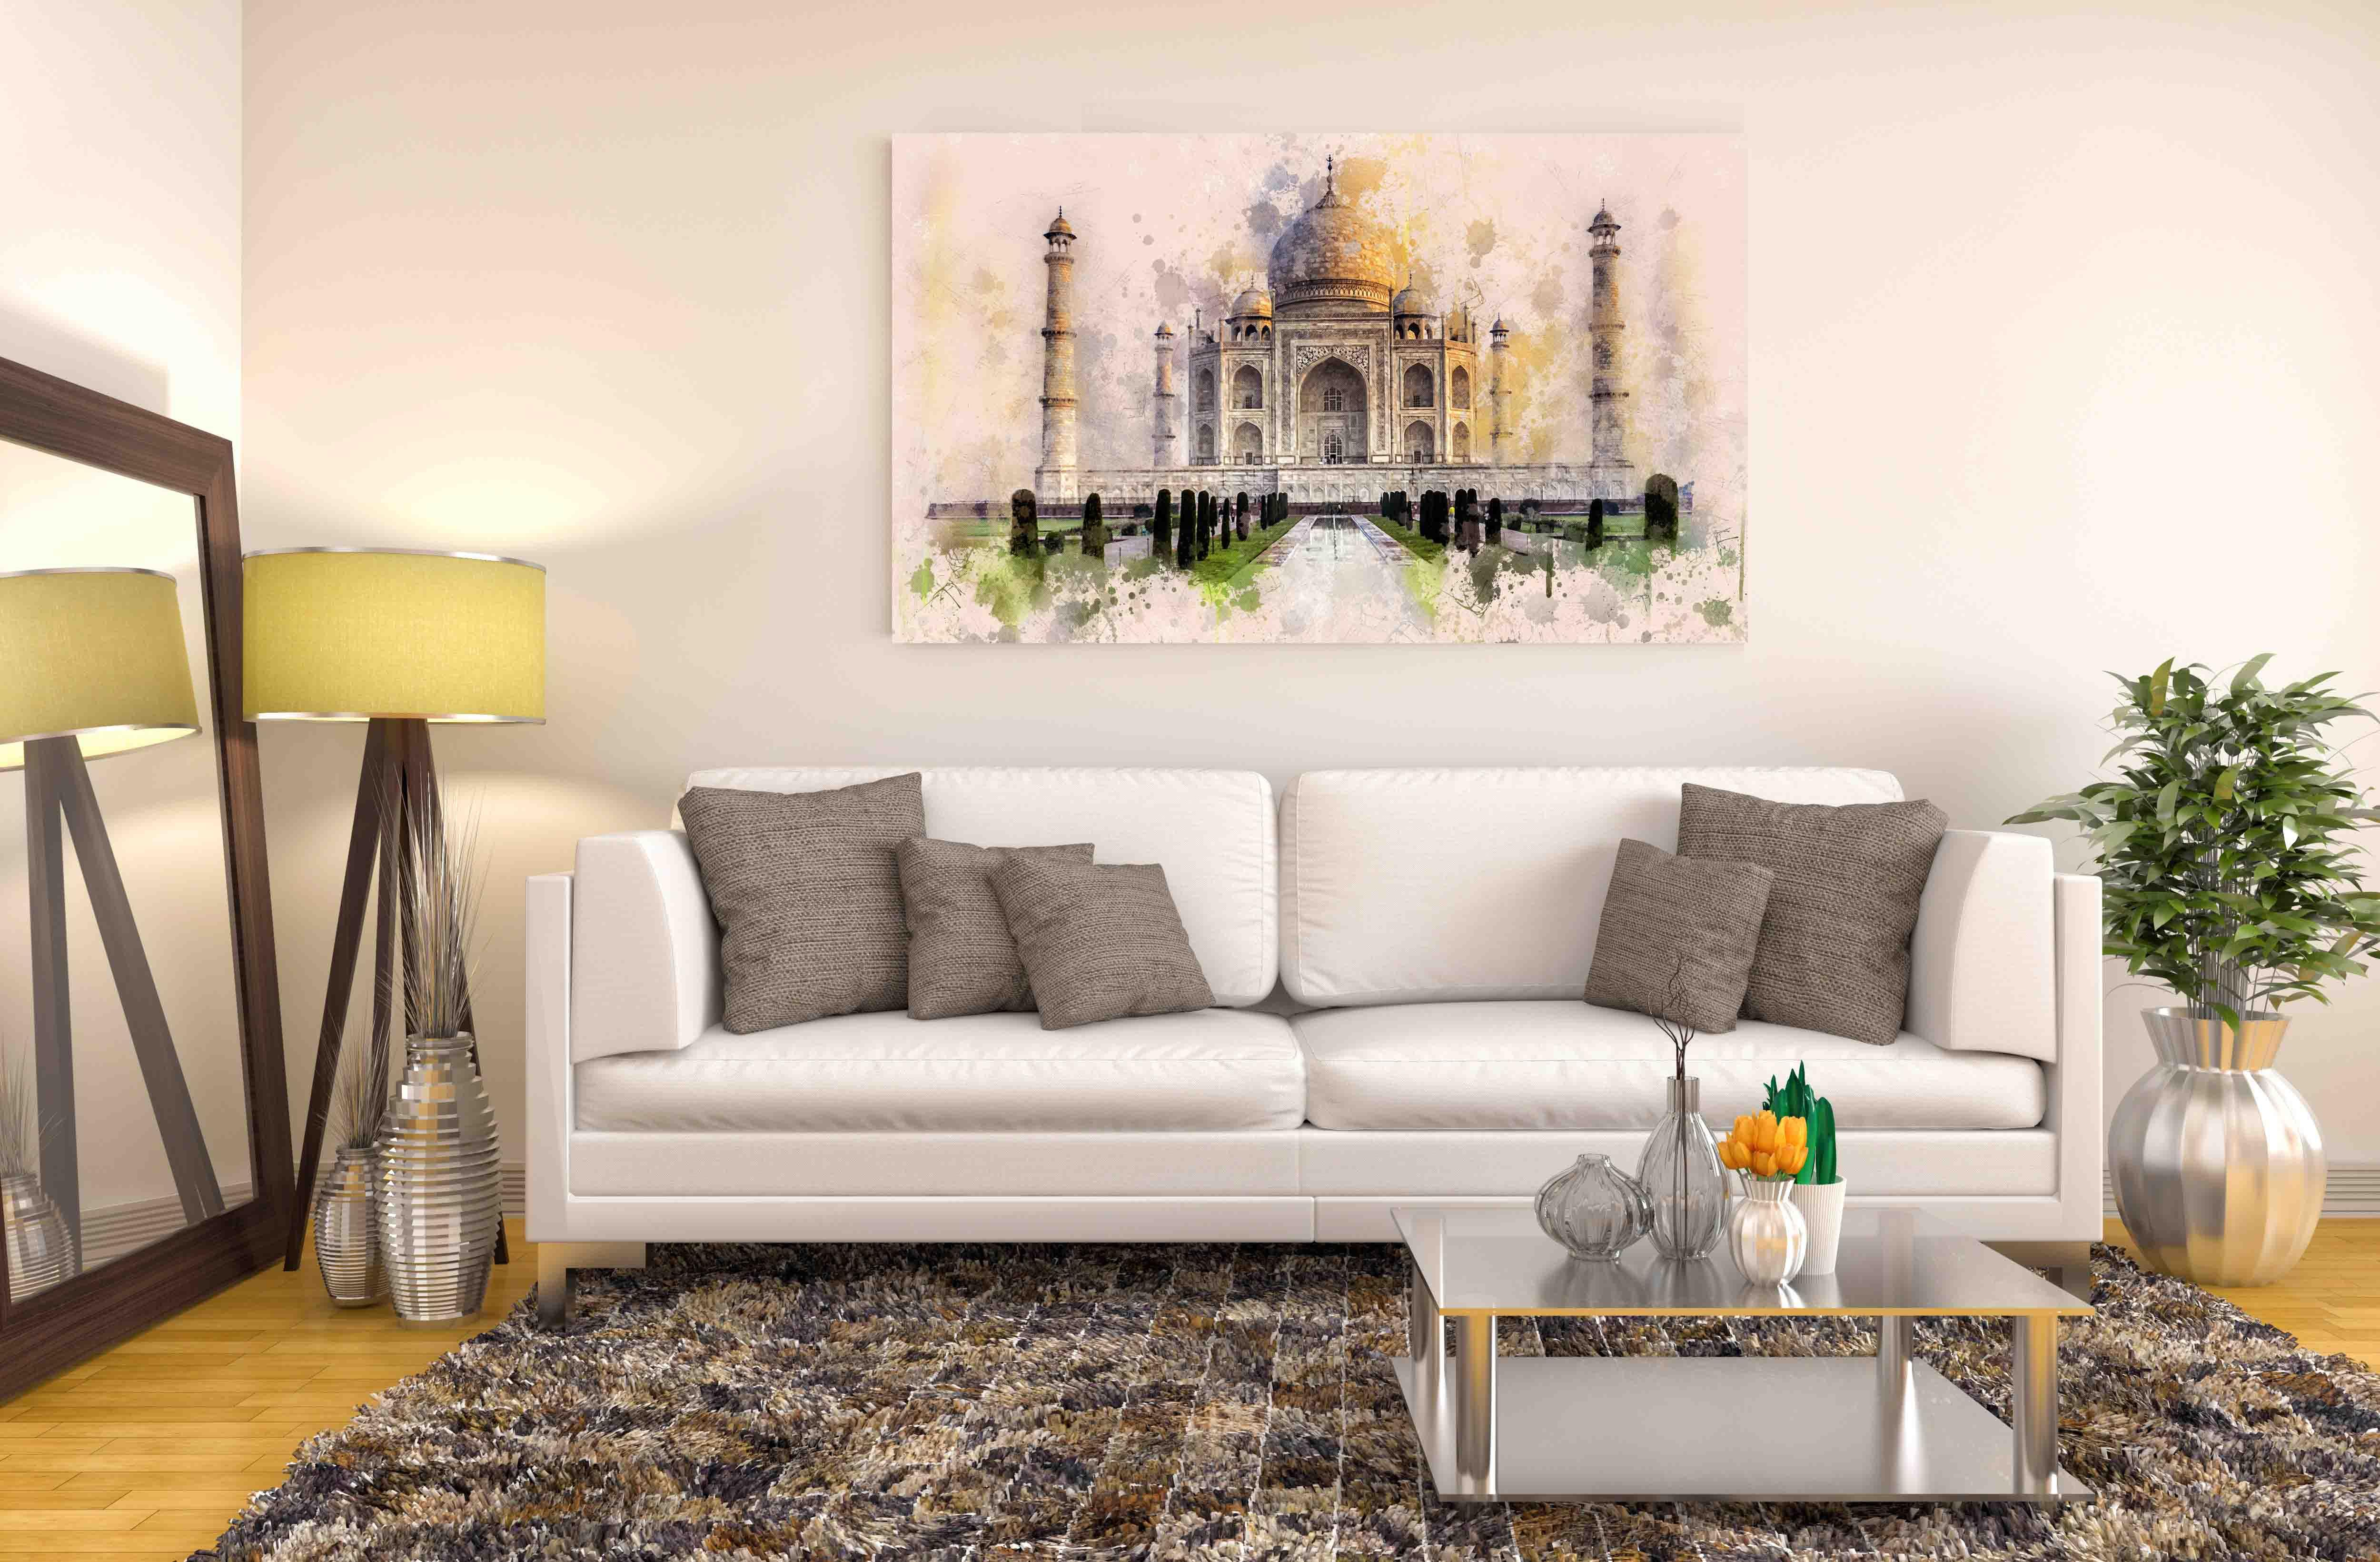 Photo painting on canvas - Magnificent Taj Mahal